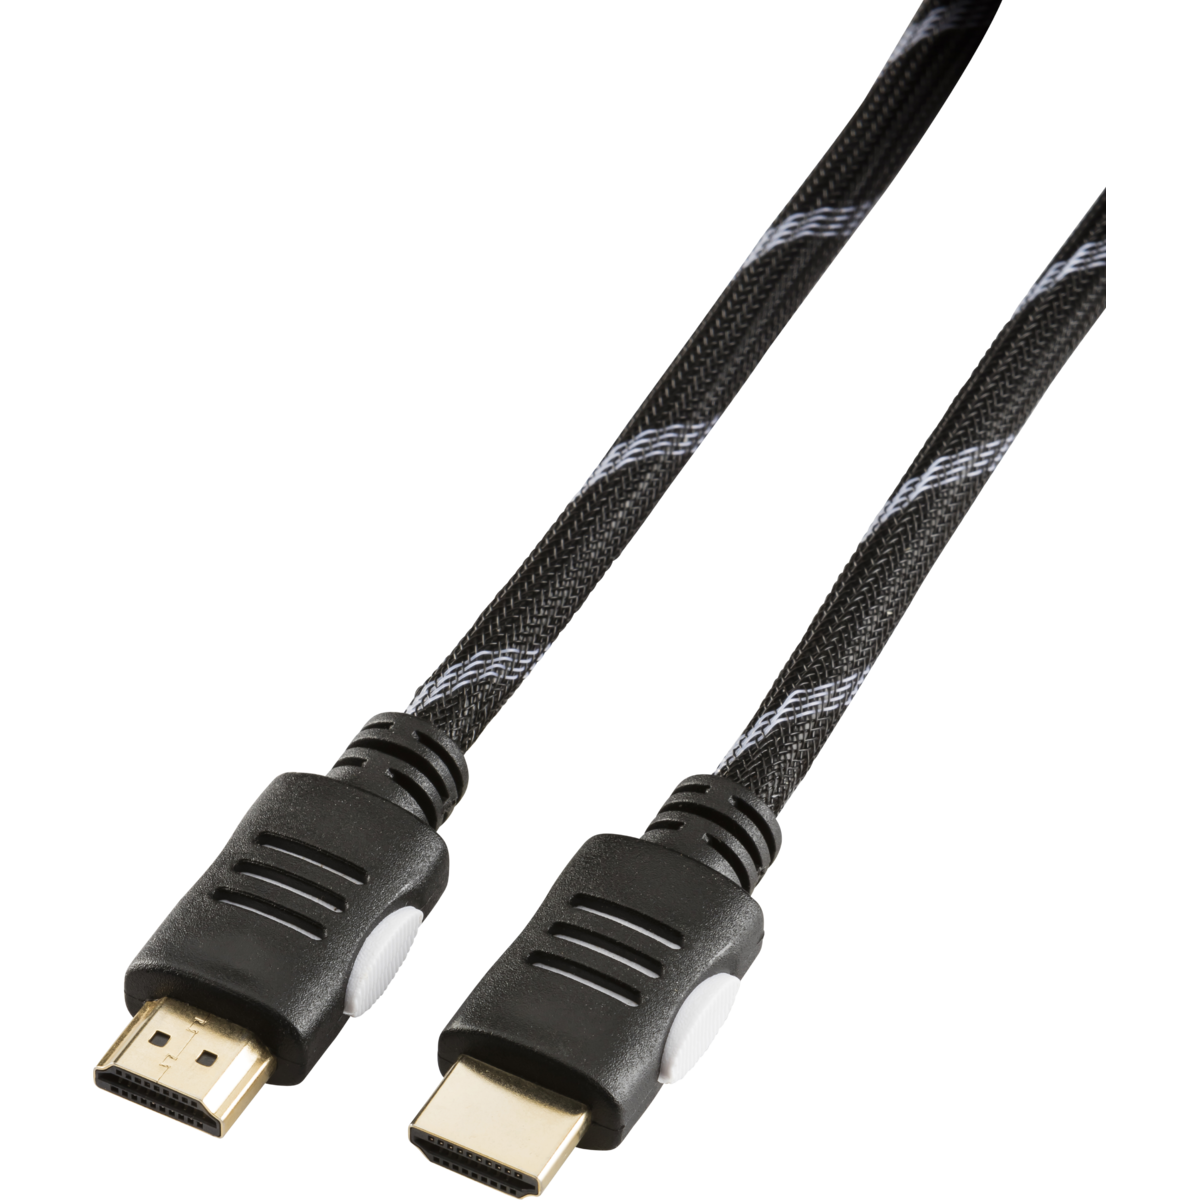 Knightsbridge AVHD4K5 4K High Speed HDMI Cable 5m